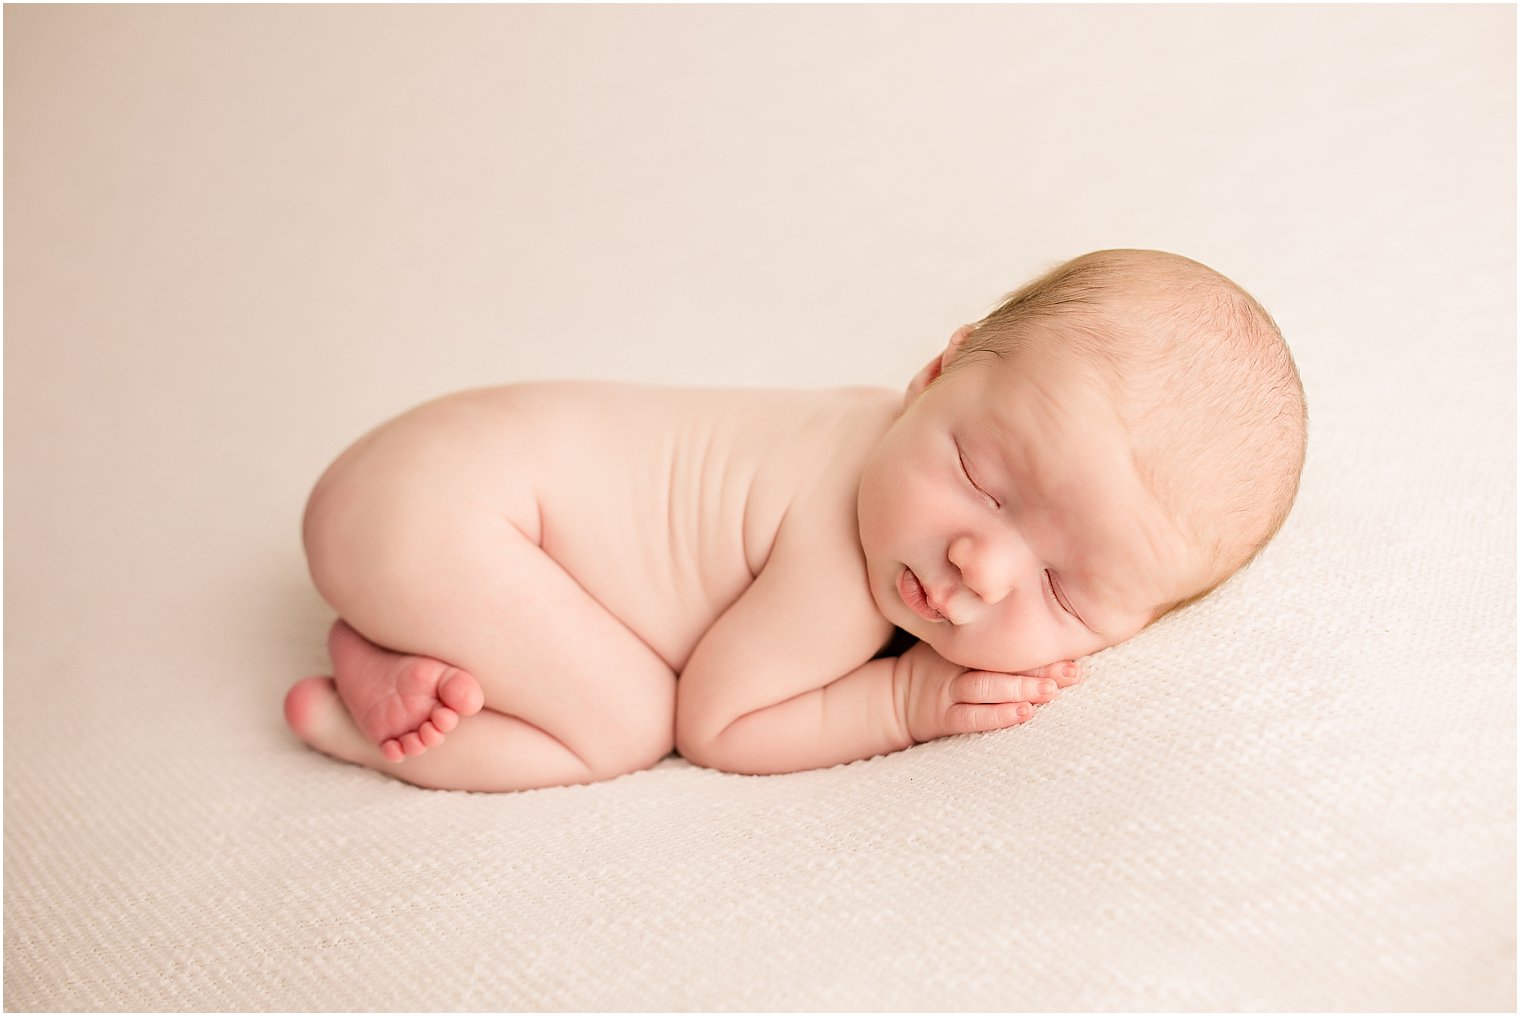 Newborn in tushie up pose